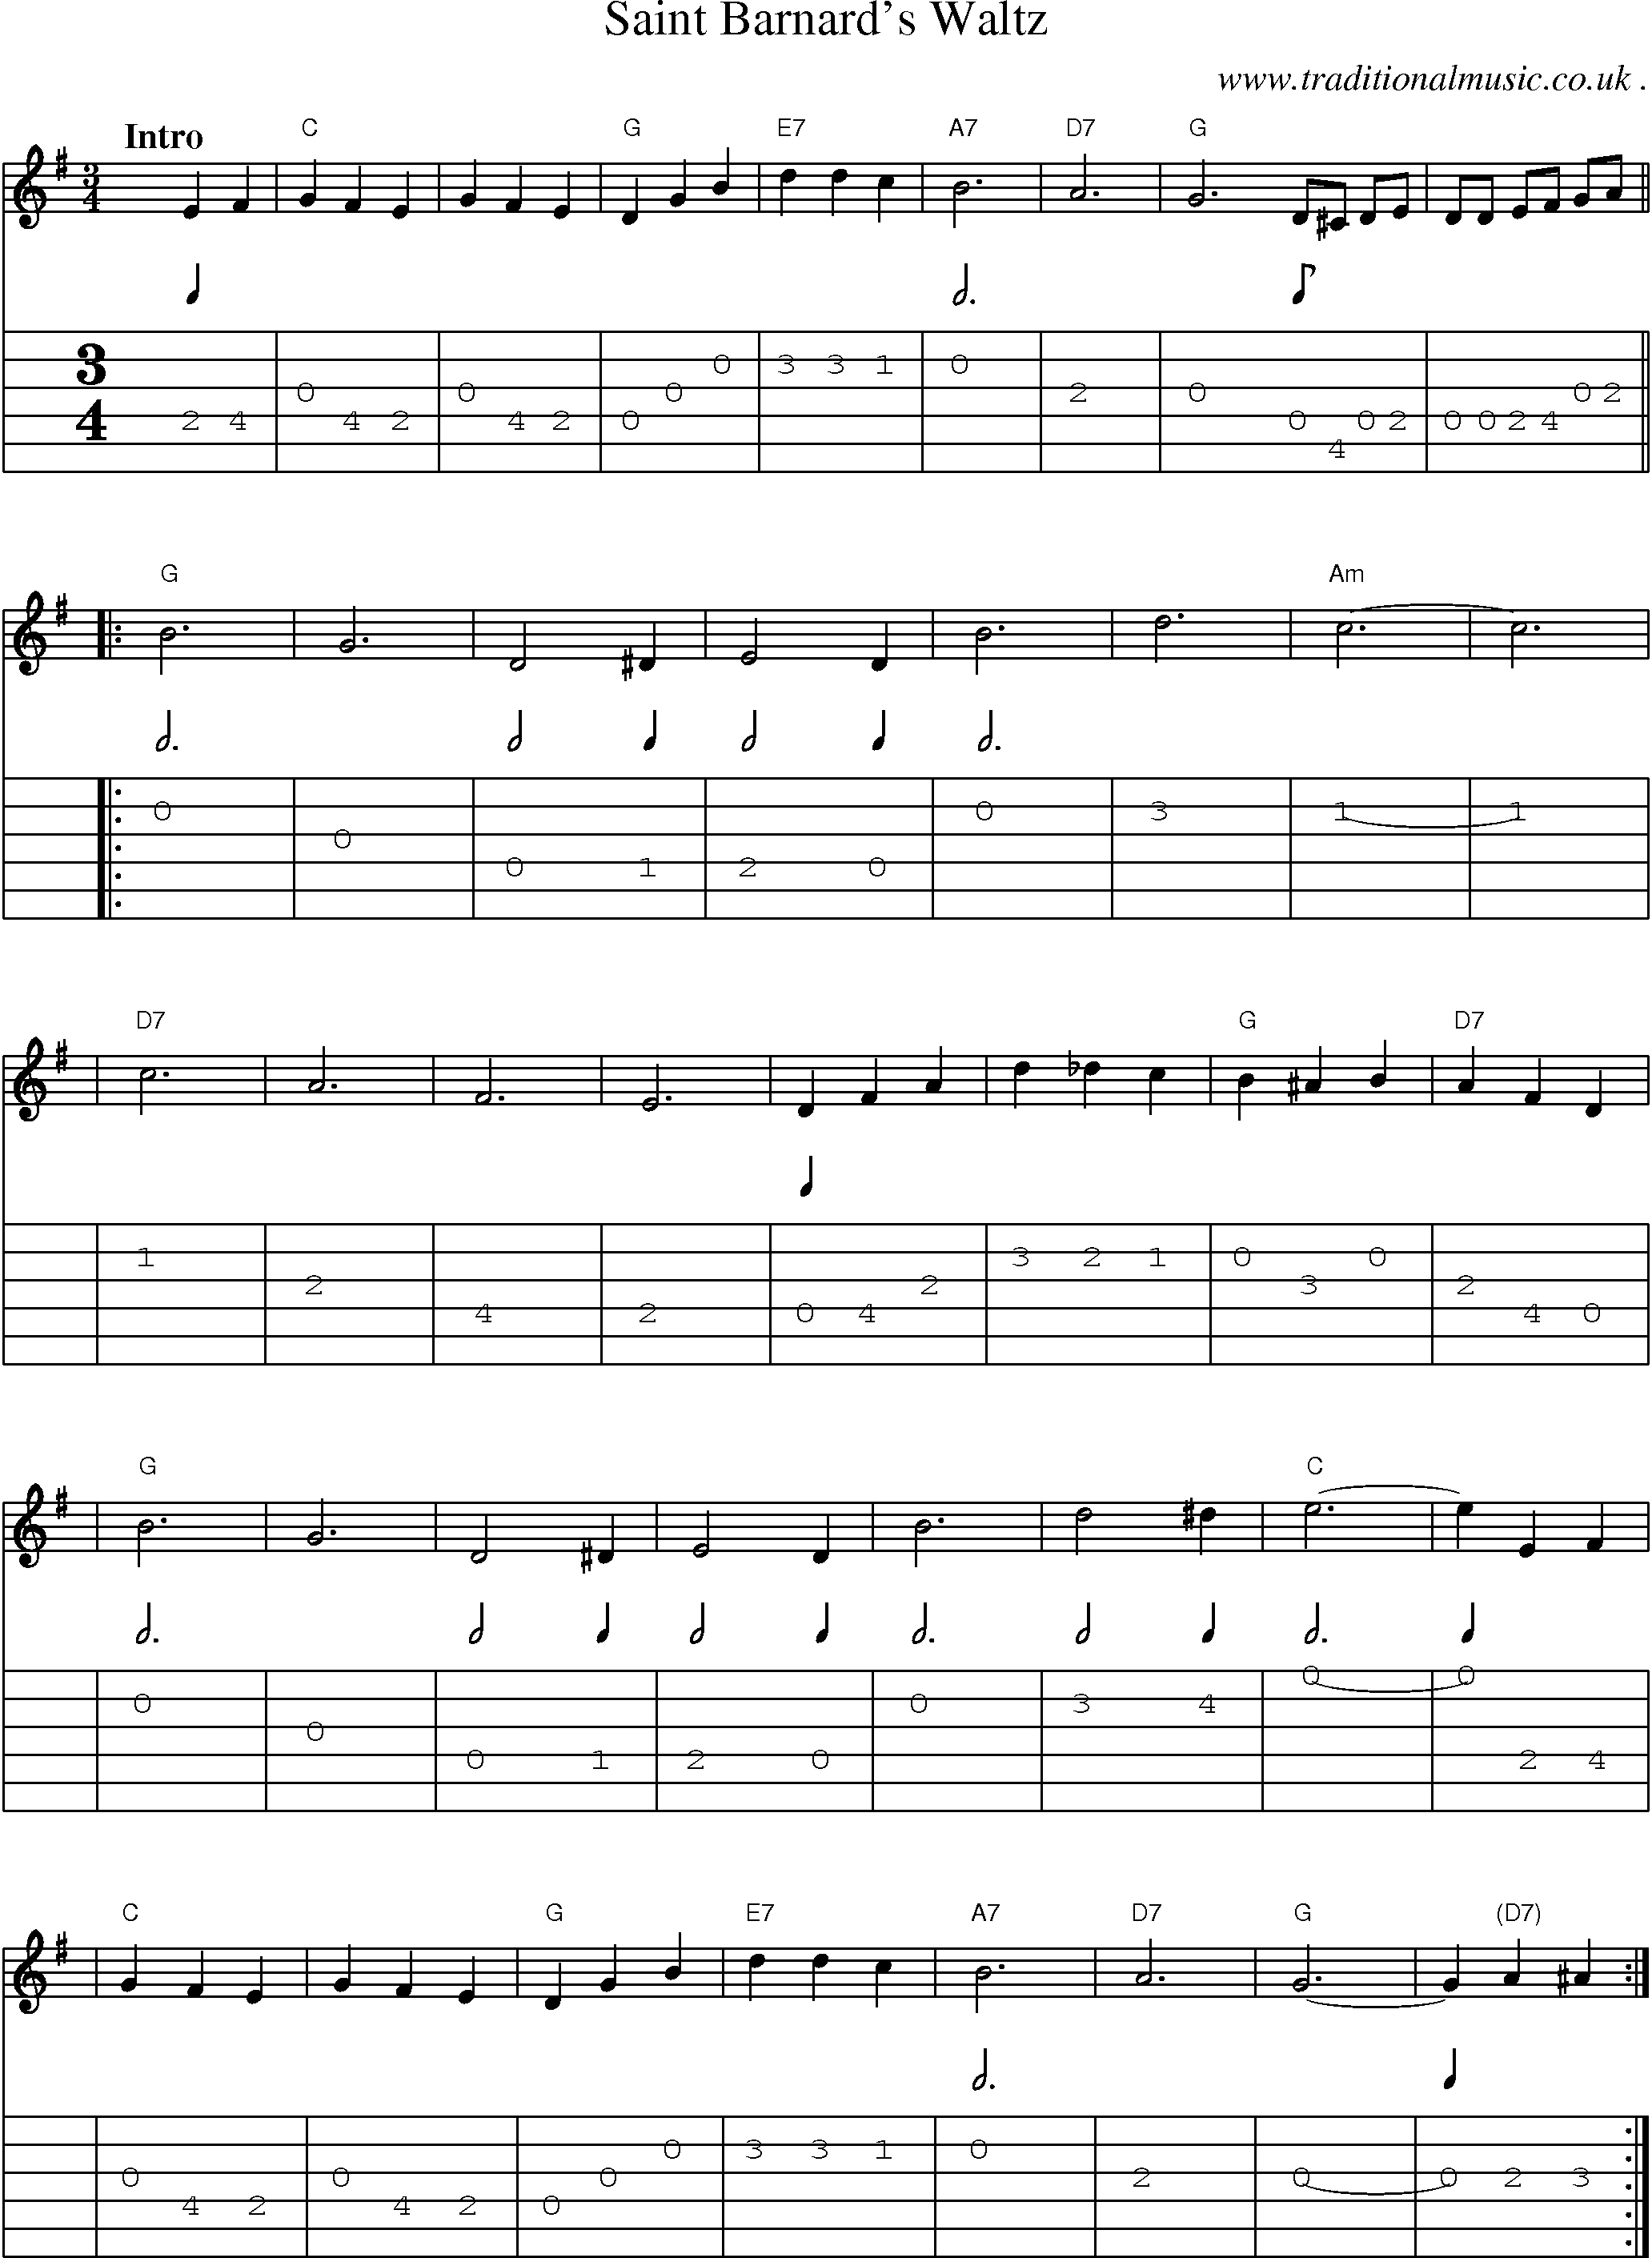 Sheet-music  score, Chords and Guitar Tabs for Saint Barnards Waltz